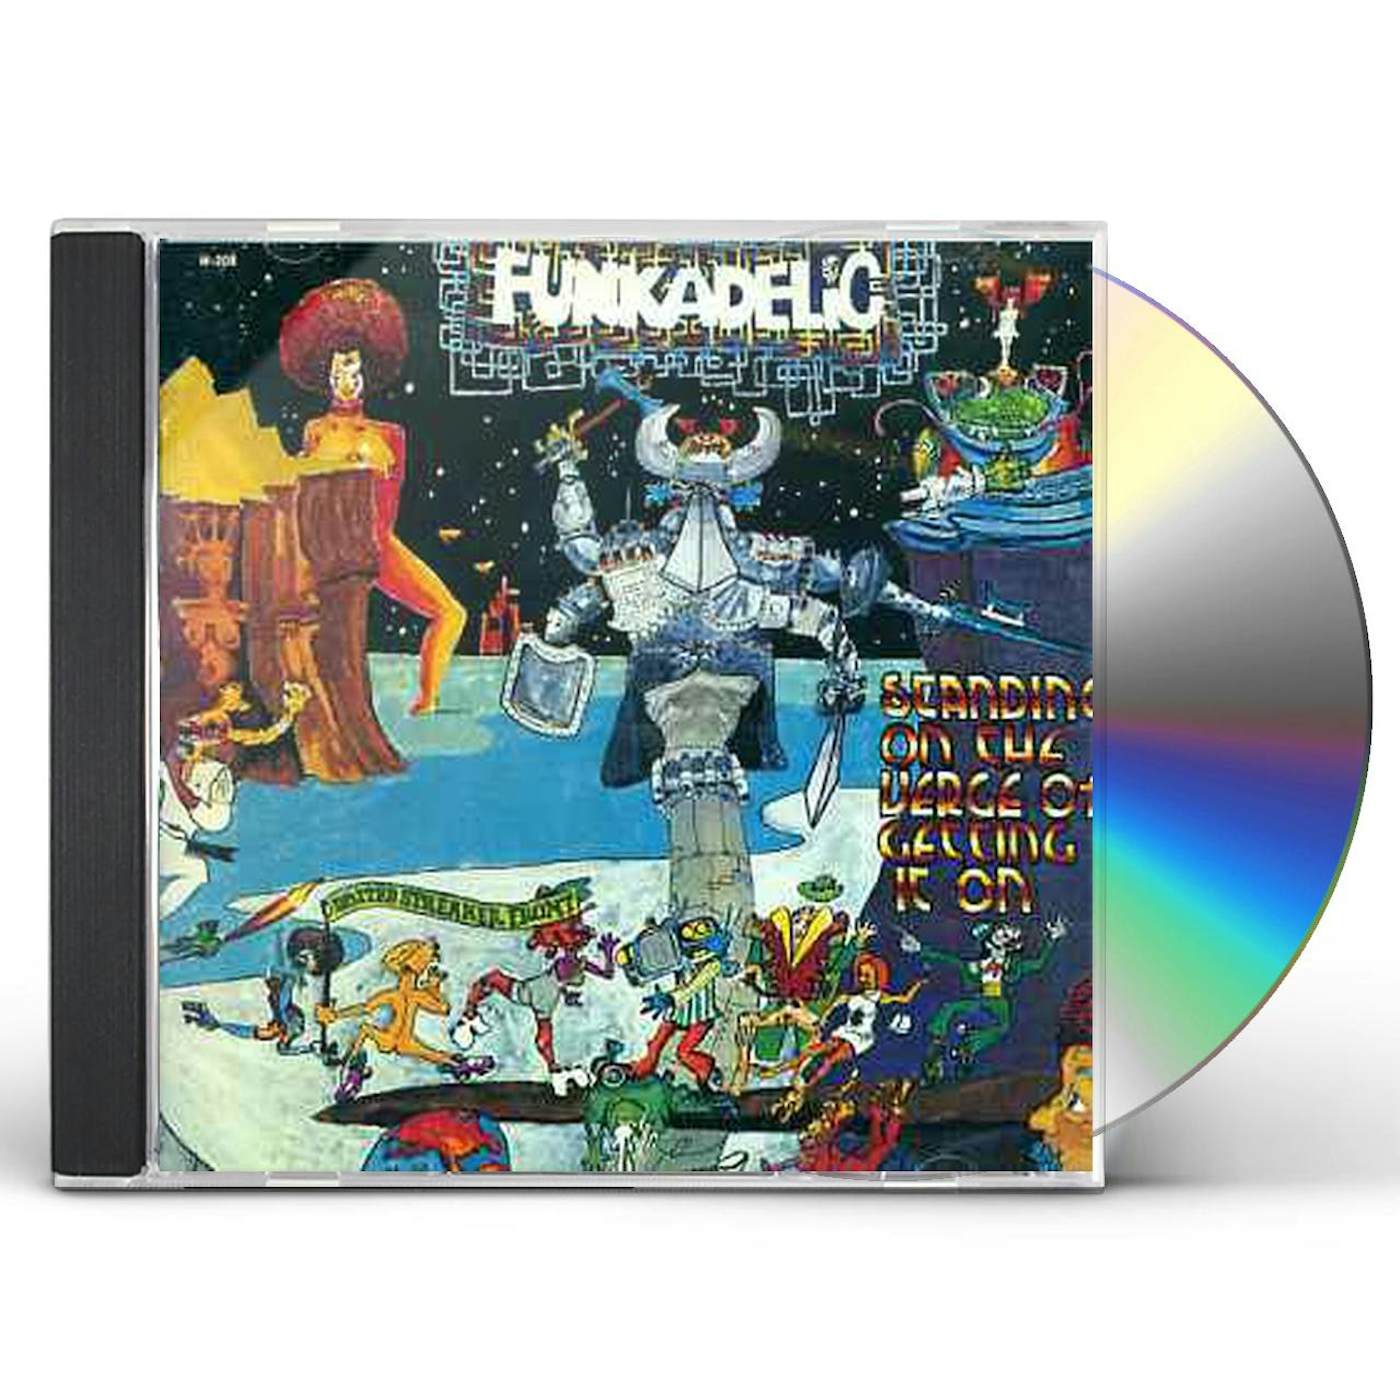 Funkadelic STANDING ON VERGE OF GETTING IT ON CD